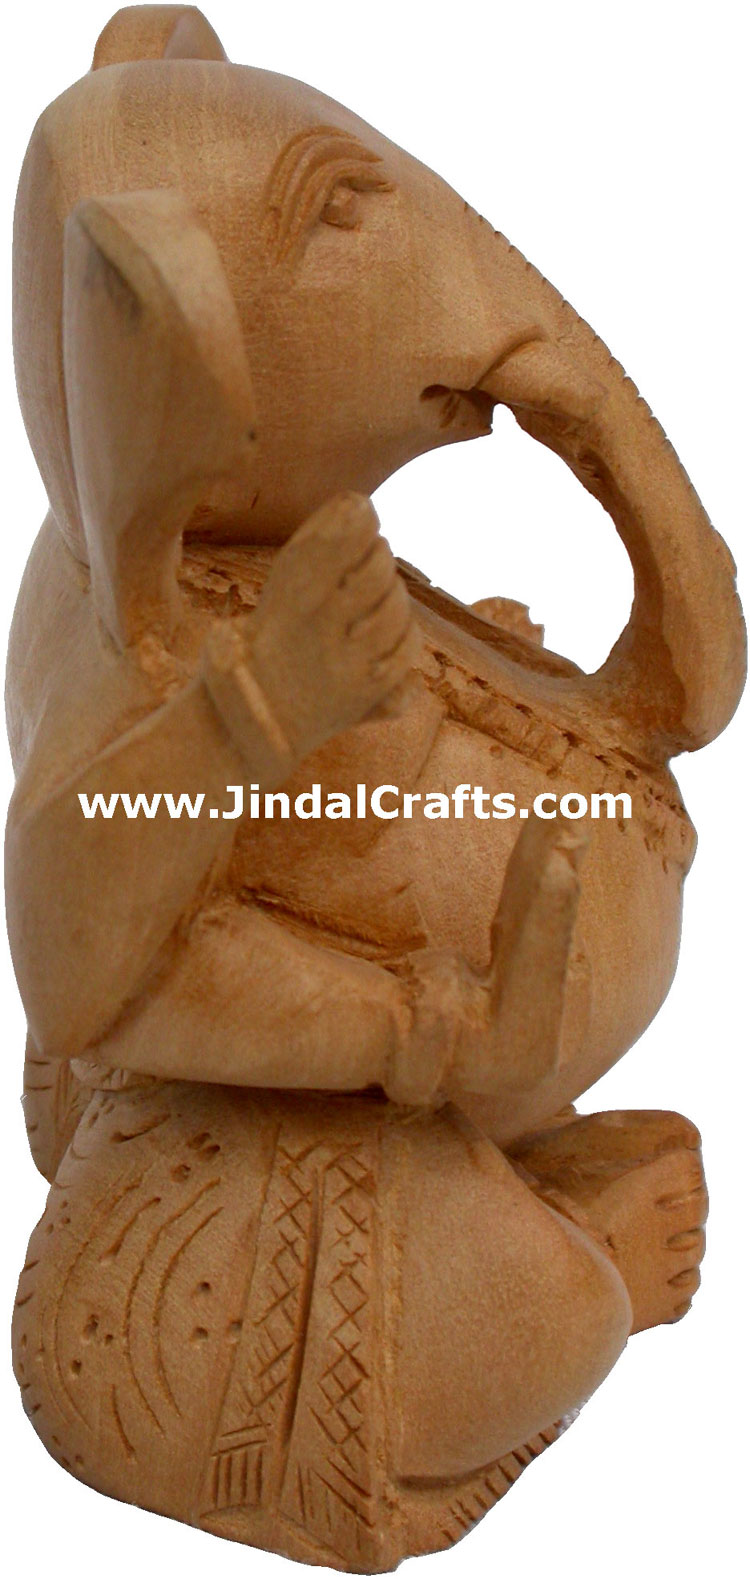 Appu Ganesh Hand Carving India Religious Statue Arts